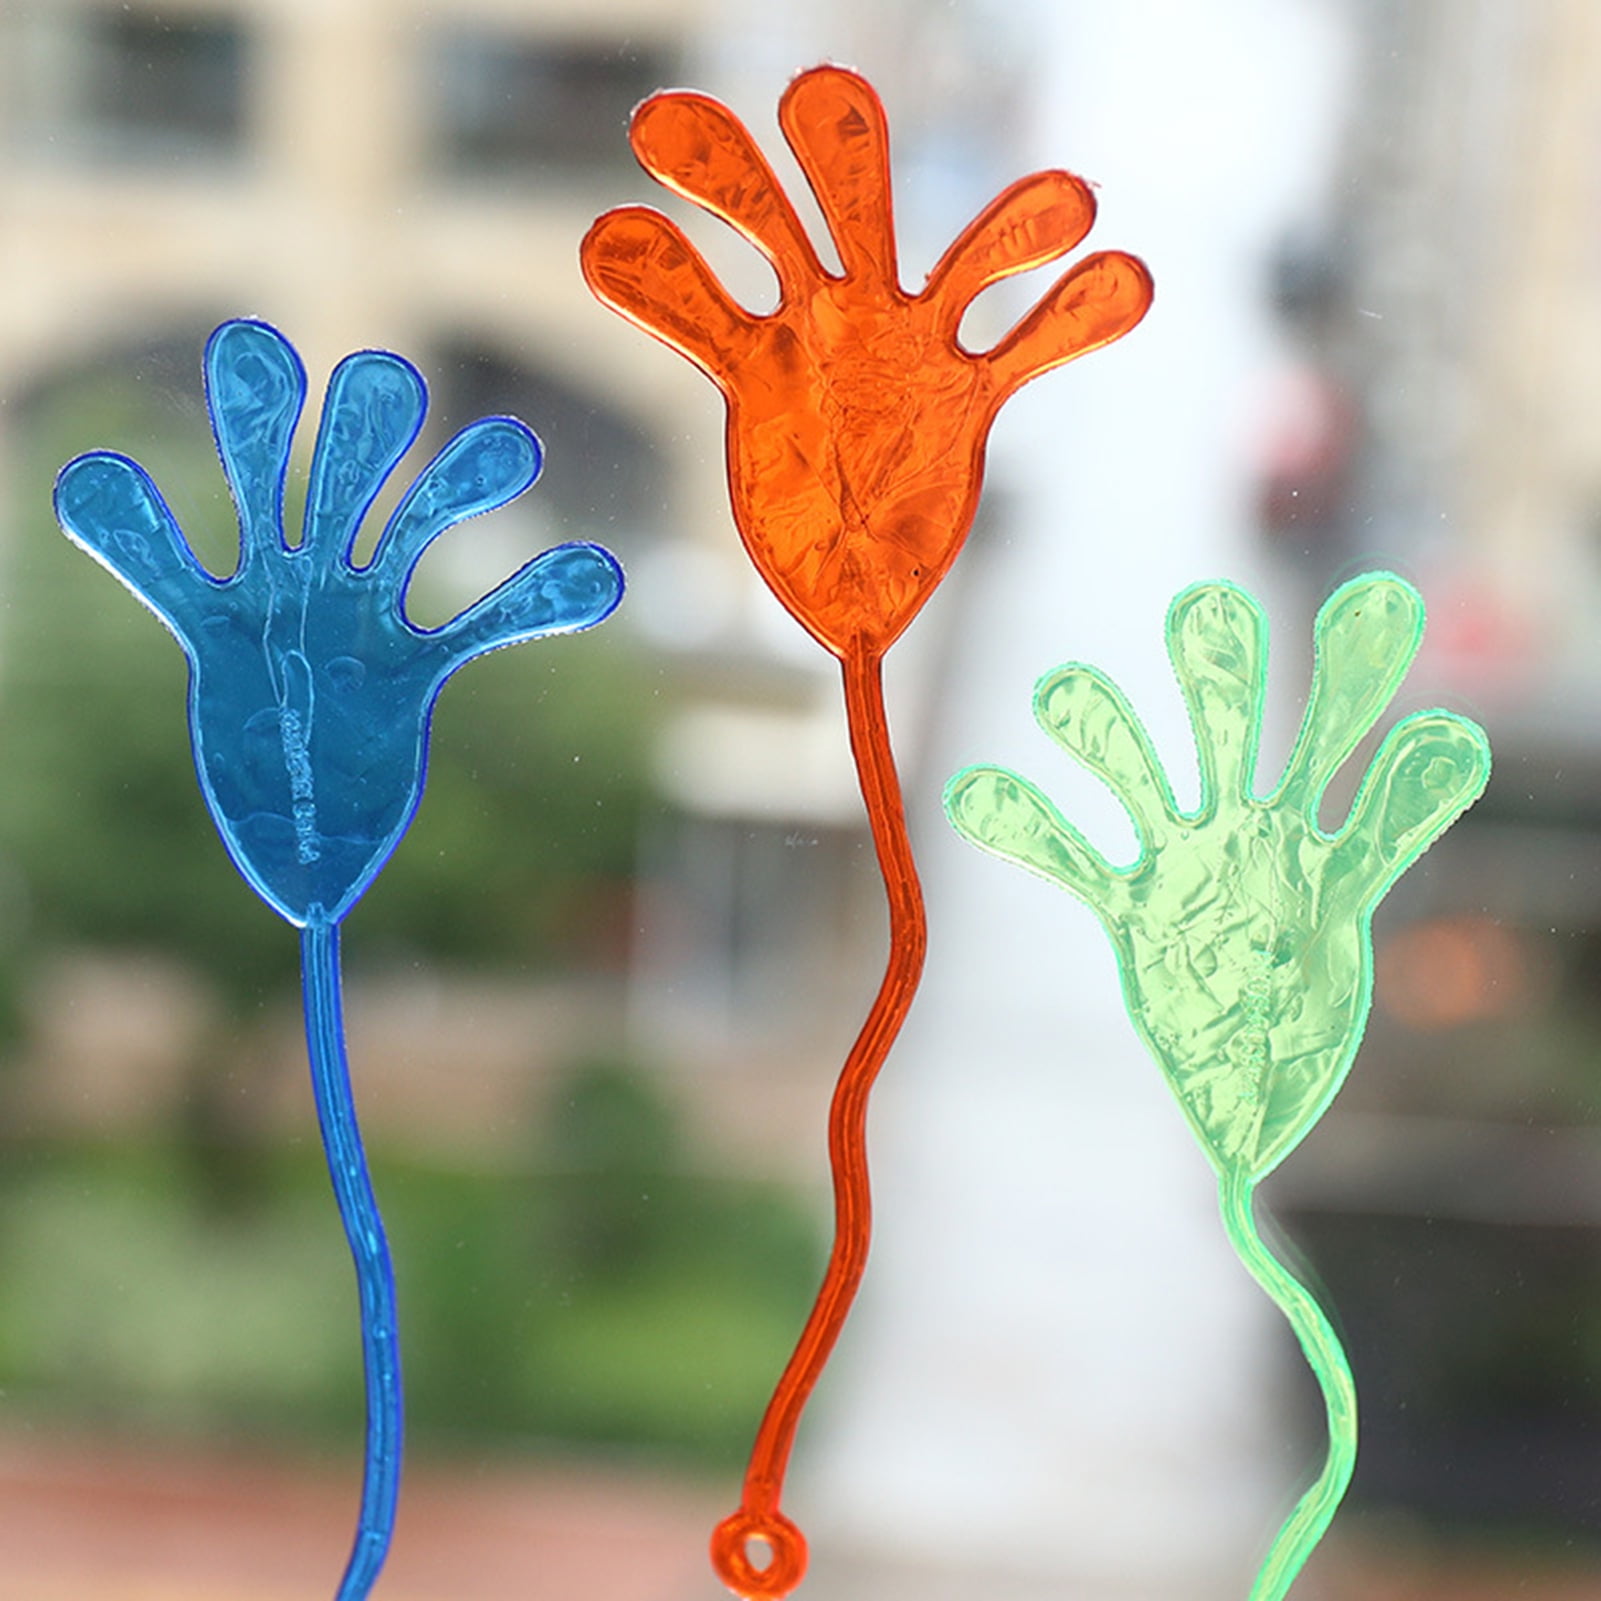 Armaytoy 45PCS Sticky Hands for Kids Mini Stretchy Squishy Toys